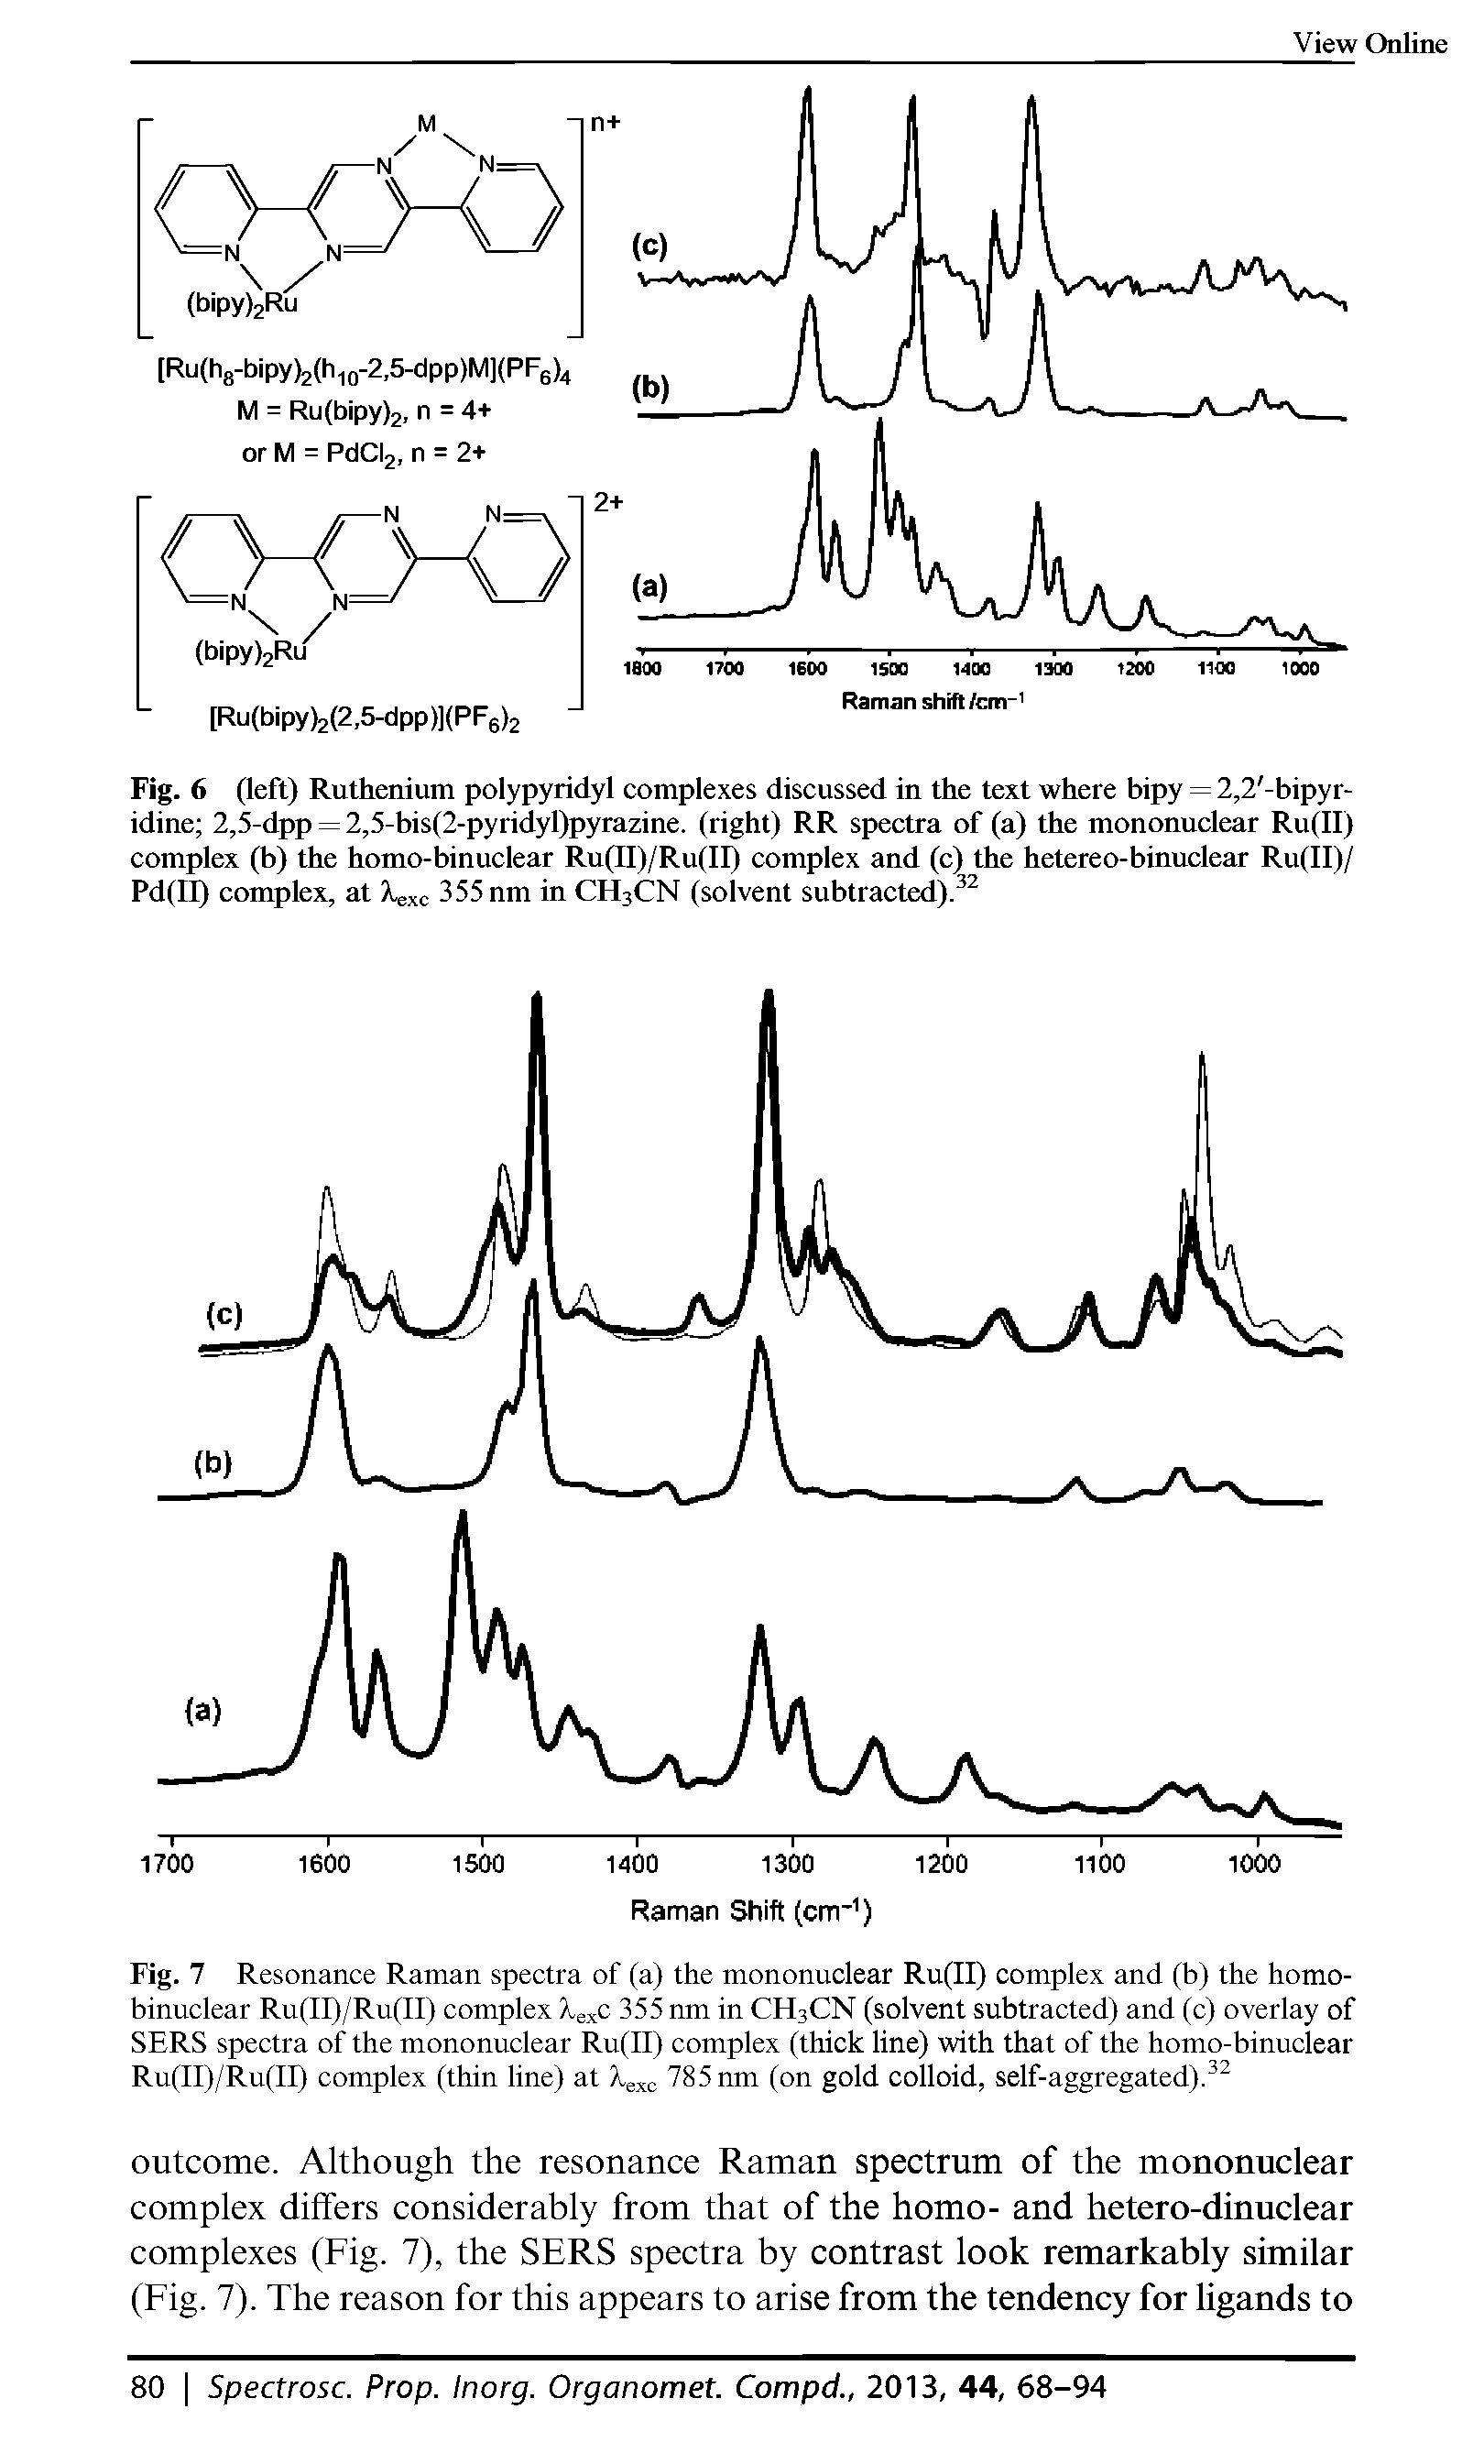 Fig. 7 Resonance Raman spectra of (a) the mononuclear Ru(II) complex and (b) the homo-binuclear Ru(II)/Ru(II) complex 355 nm in CH3CN (solvent subtracted) and (c) overlay of SERS spectra of the mononuclear Ru(II) complex (thick line) with that of the homo-binuclear Ru(II)/Ru(II) complex (thin line) at 785 nm (on gold colloid, self-aggregated). ...